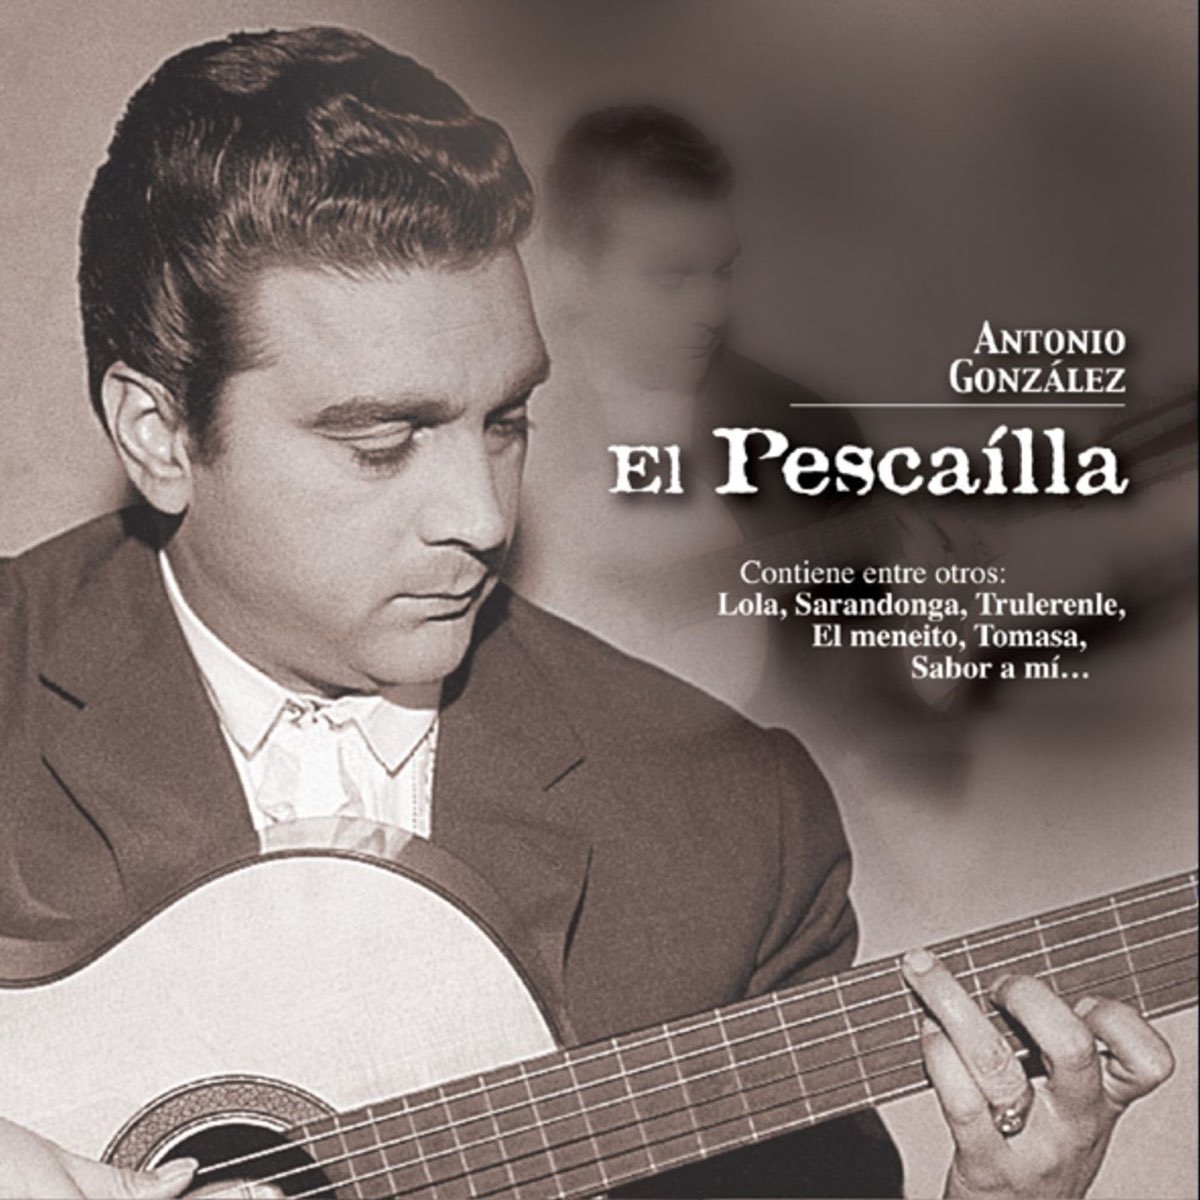 Antonio Gonzalez "El Pescailla" - Album di Antonio González - Apple Music